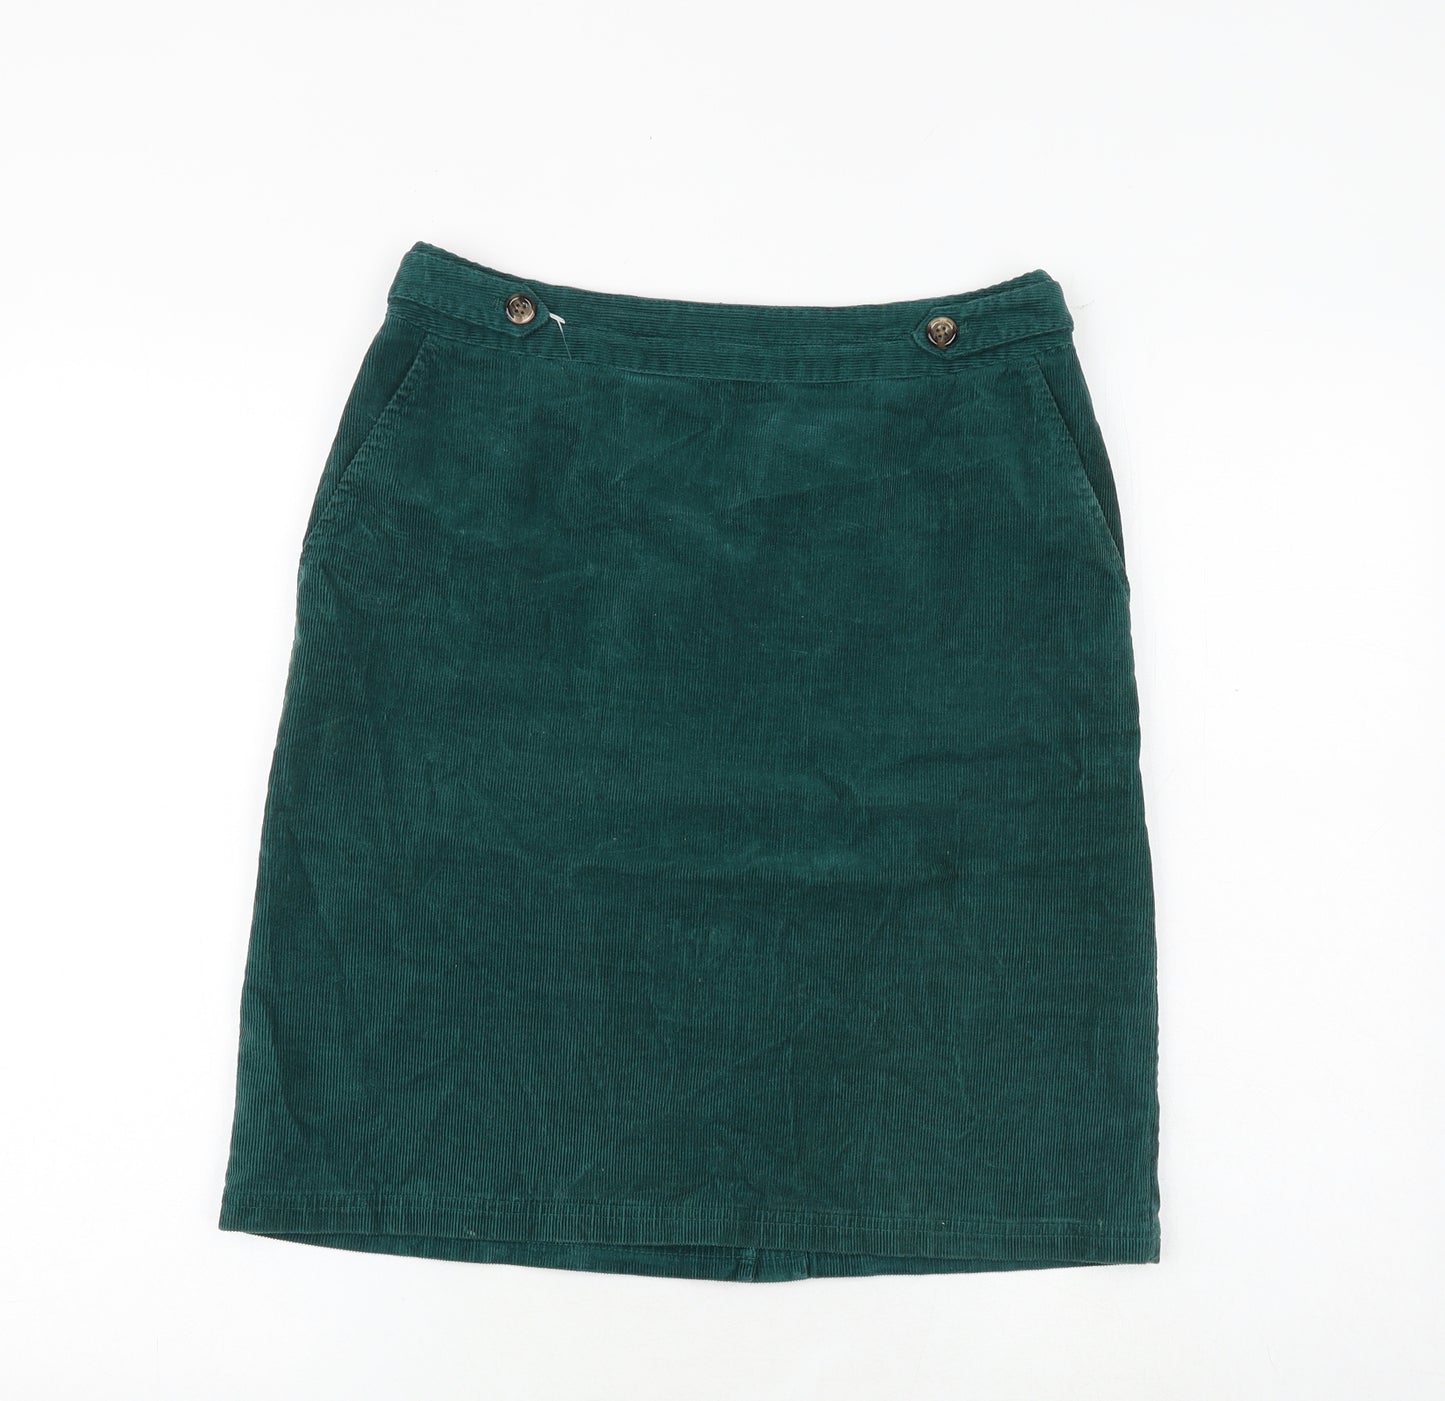 Laura Ashley Womens Green Cotton A-Line Skirt Size 10 Button